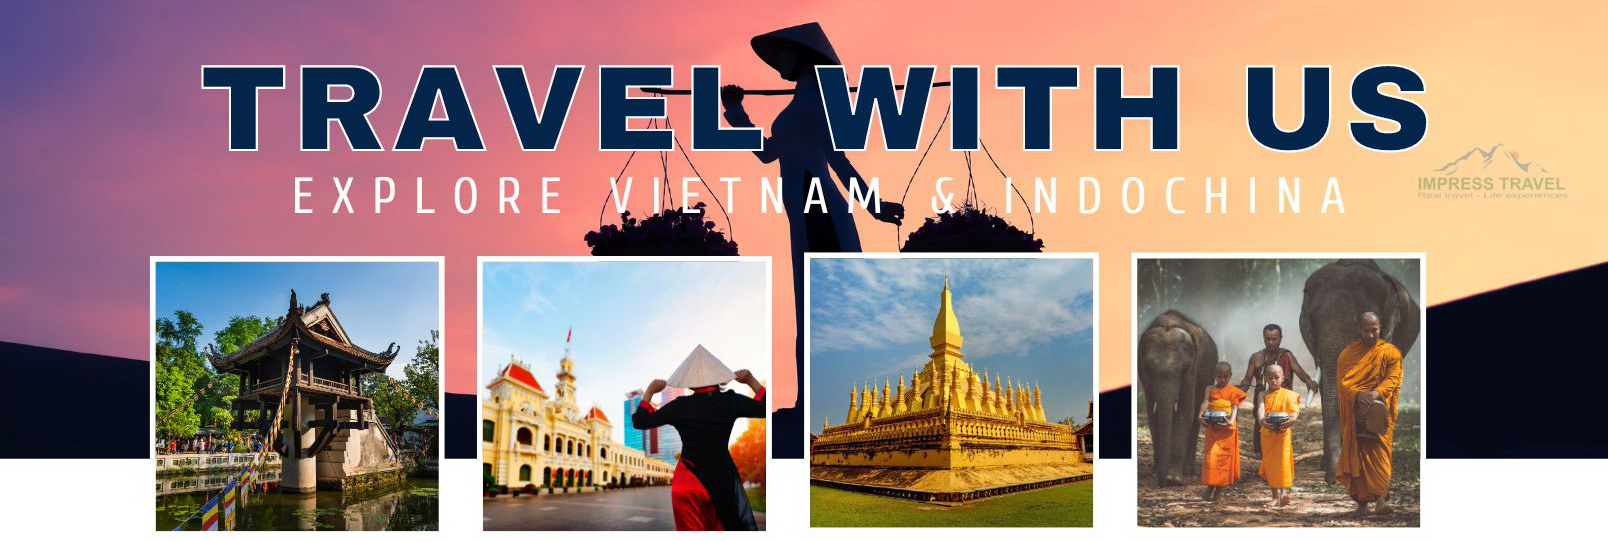 Vietnam Travel Tours